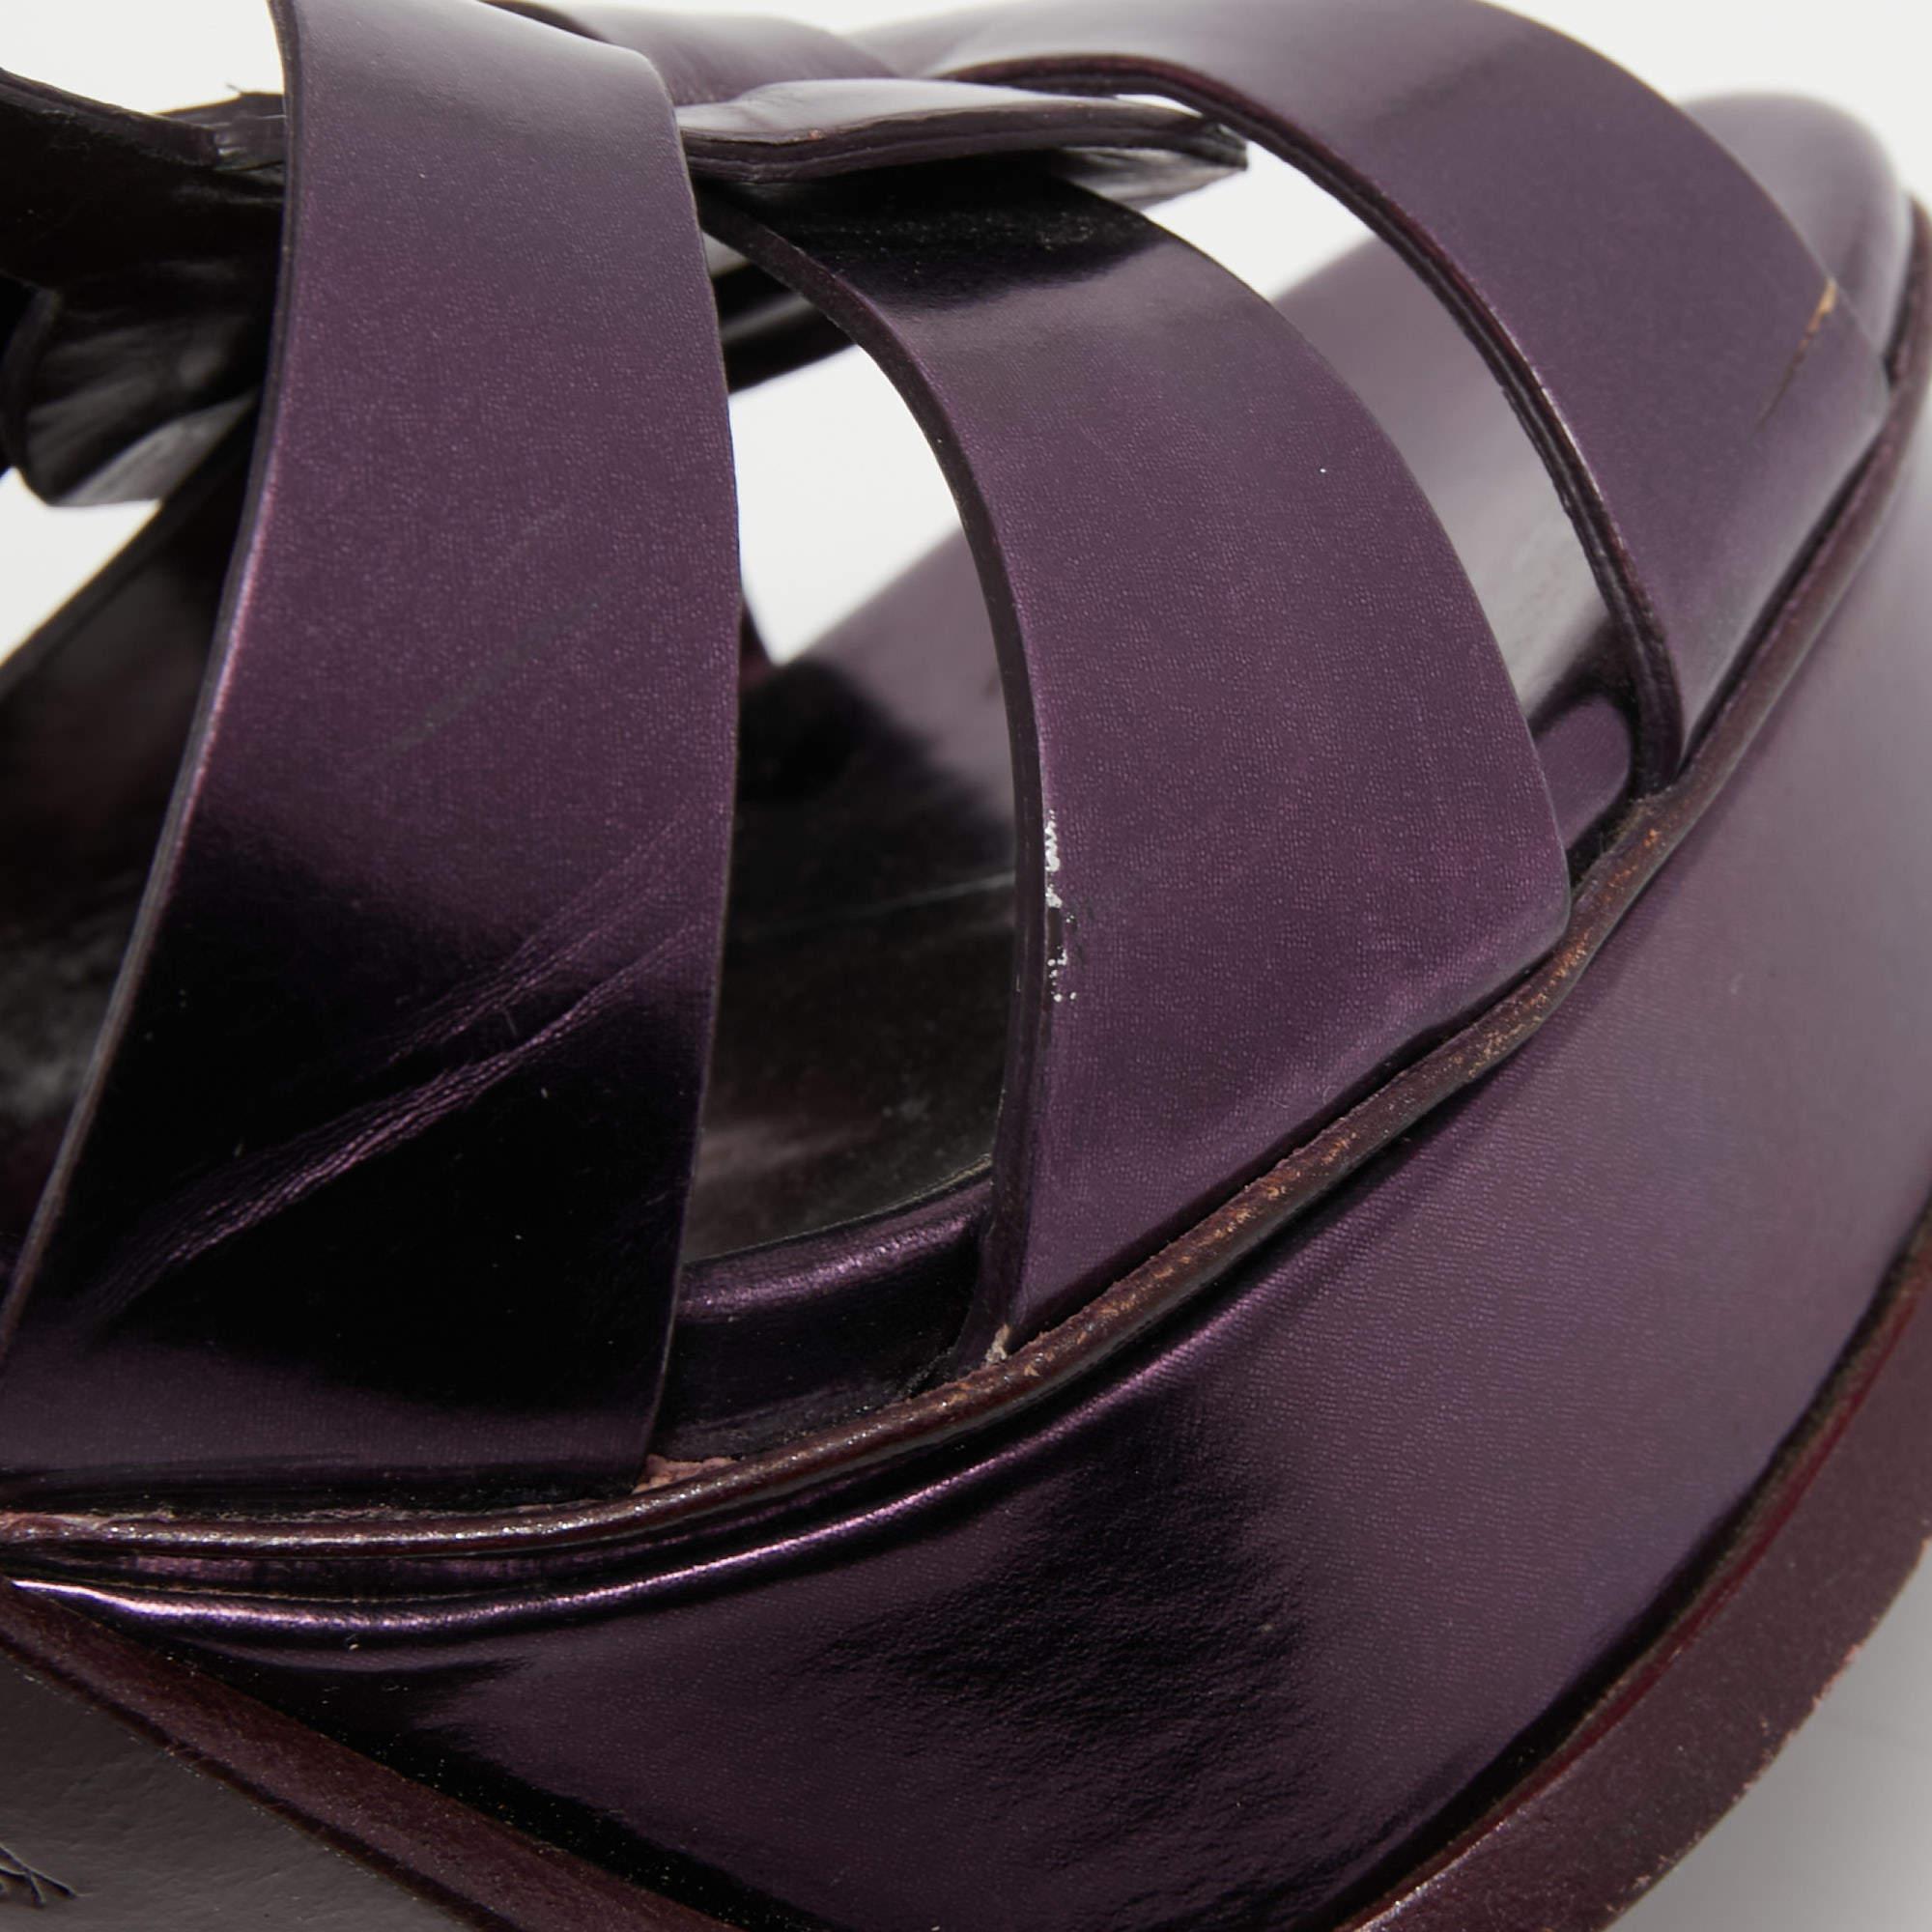 Yves Saint Laurent Metallic Purple Leather Tribute Sandals Size 38.5 4